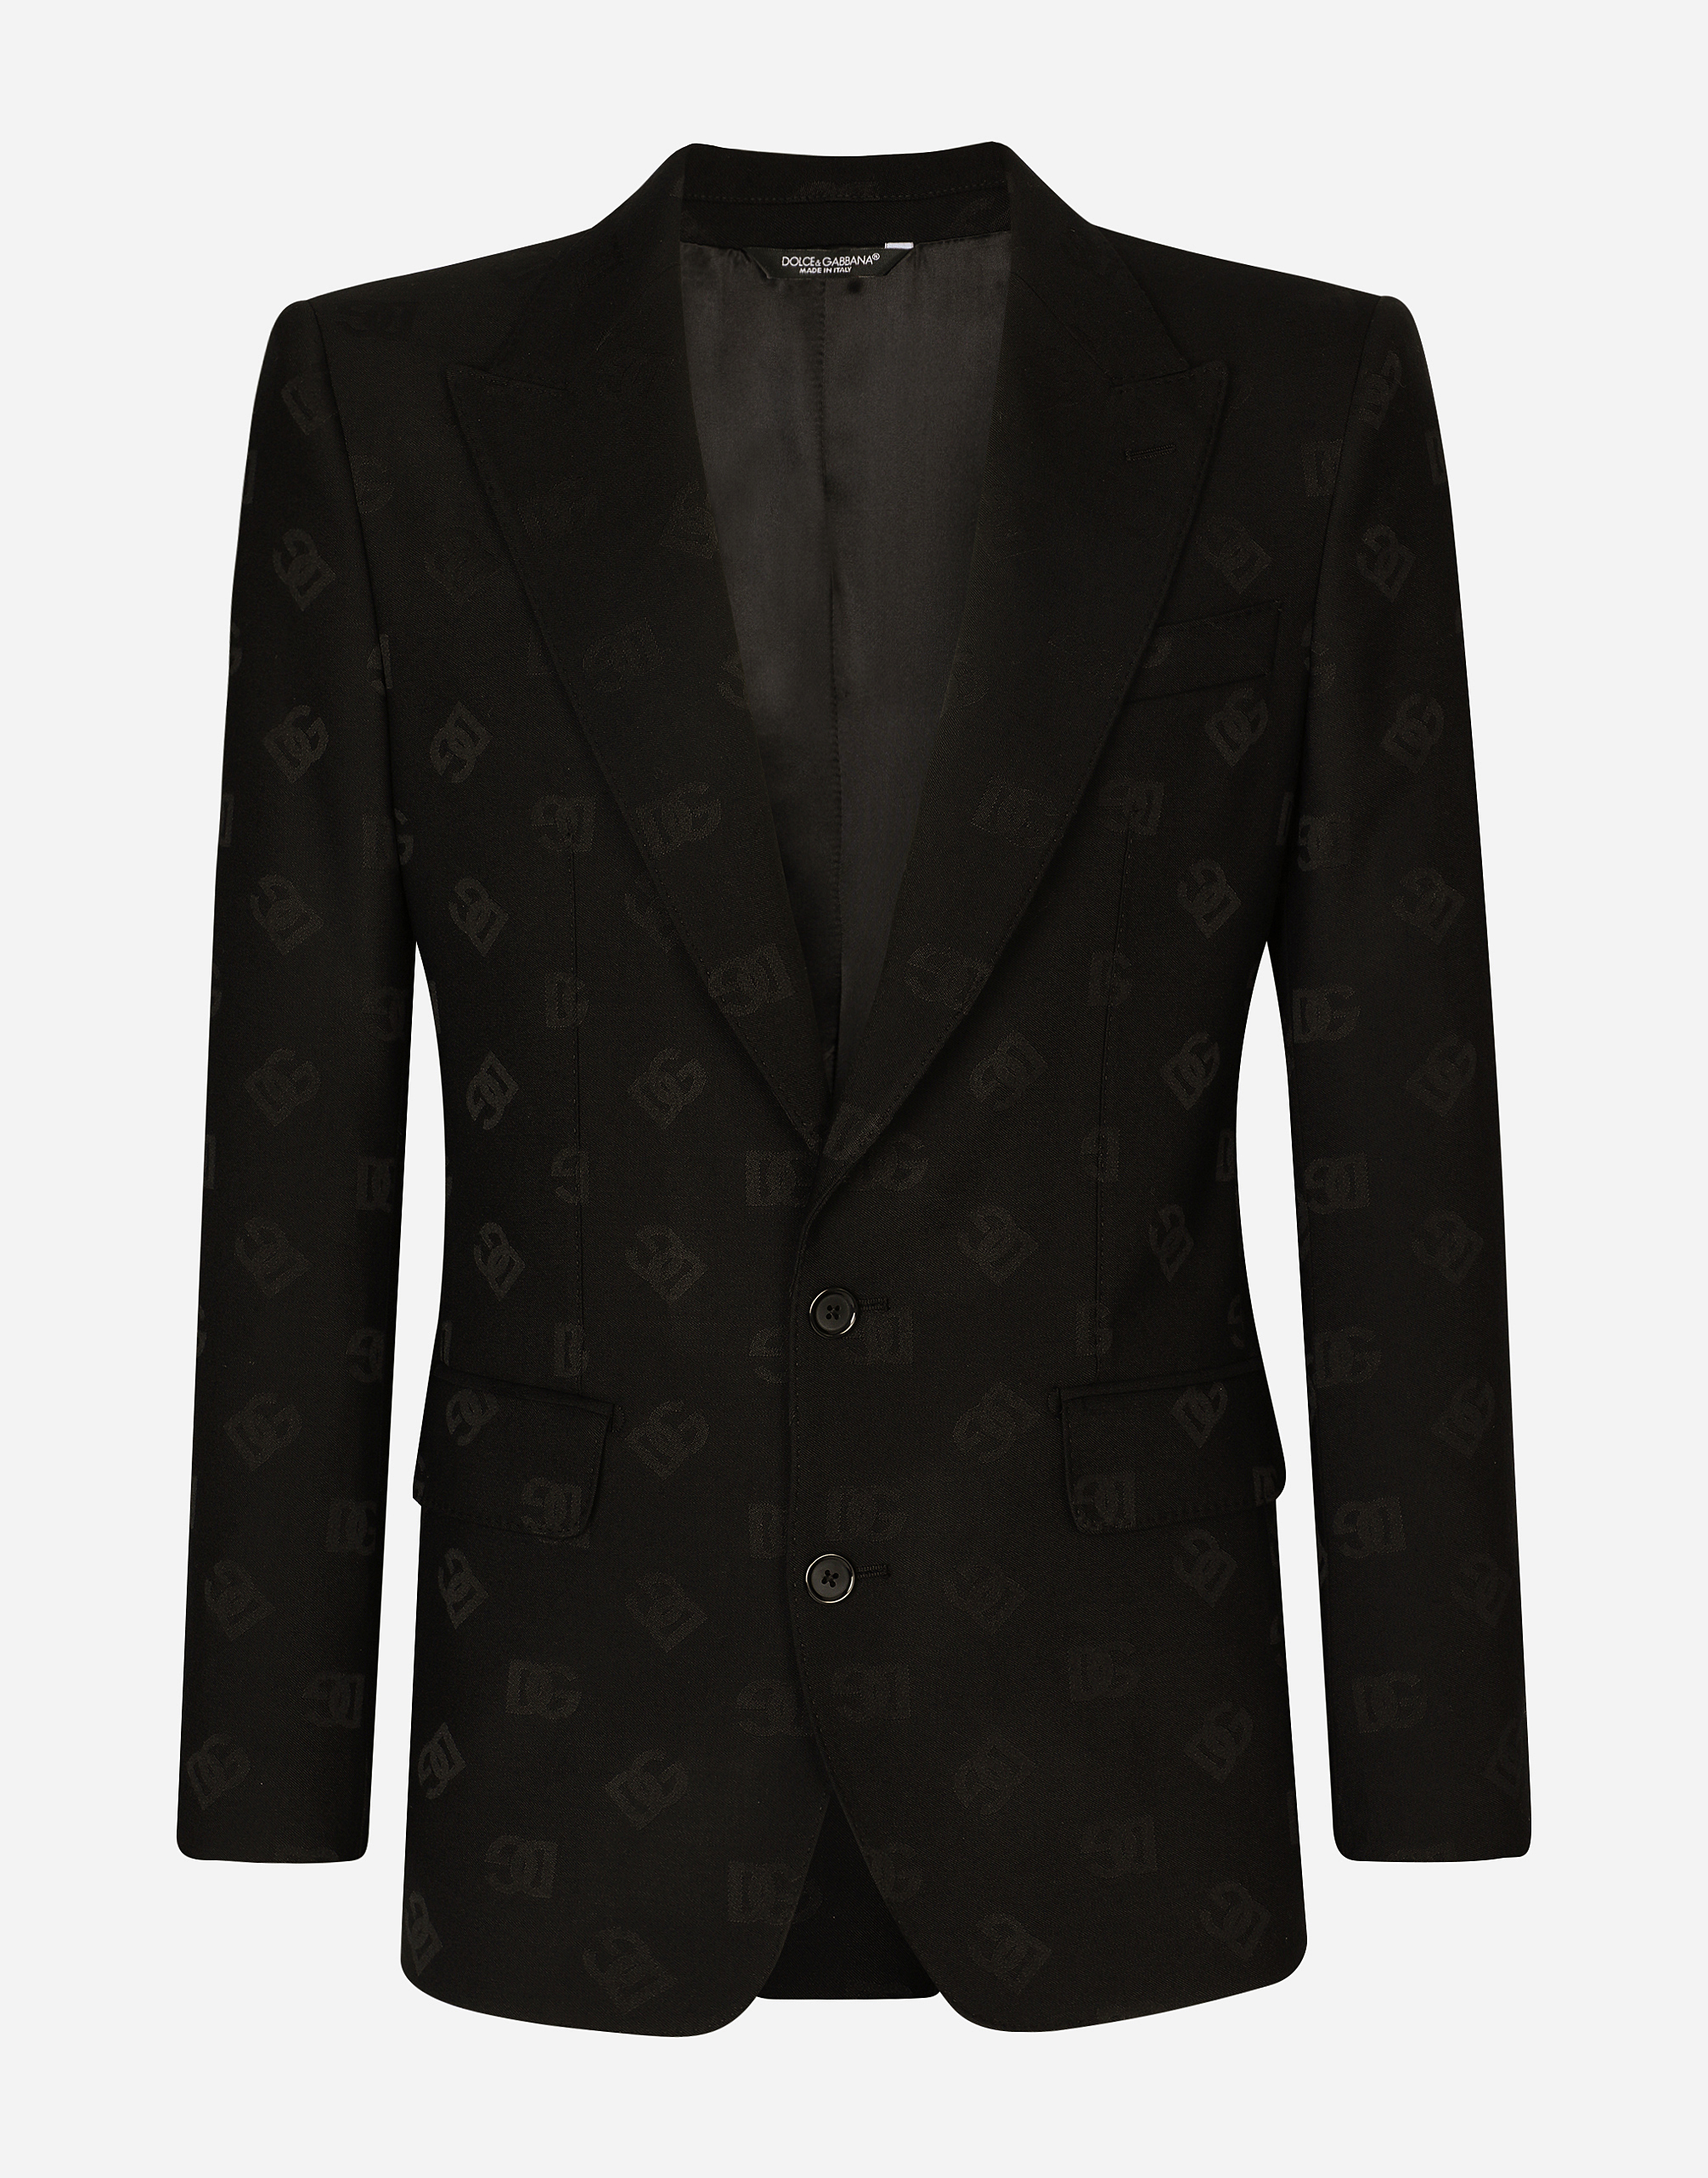 Dolce & Gabbana Single-breasted Jacquard Sicilia-fit Jacket With Dg Monogram Design In Black